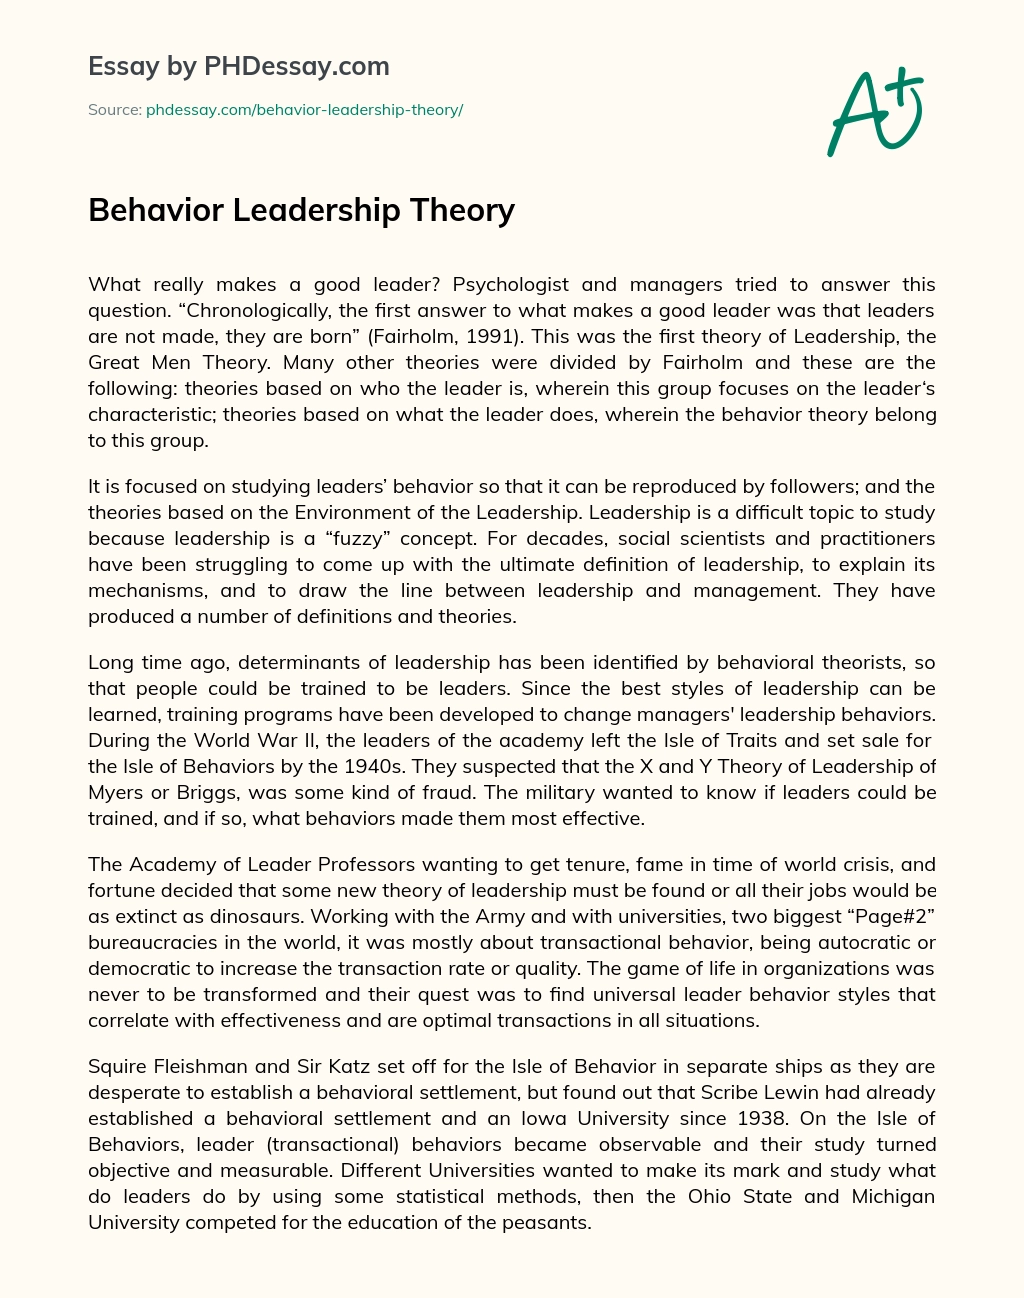 Behavior Leadership Theory essay